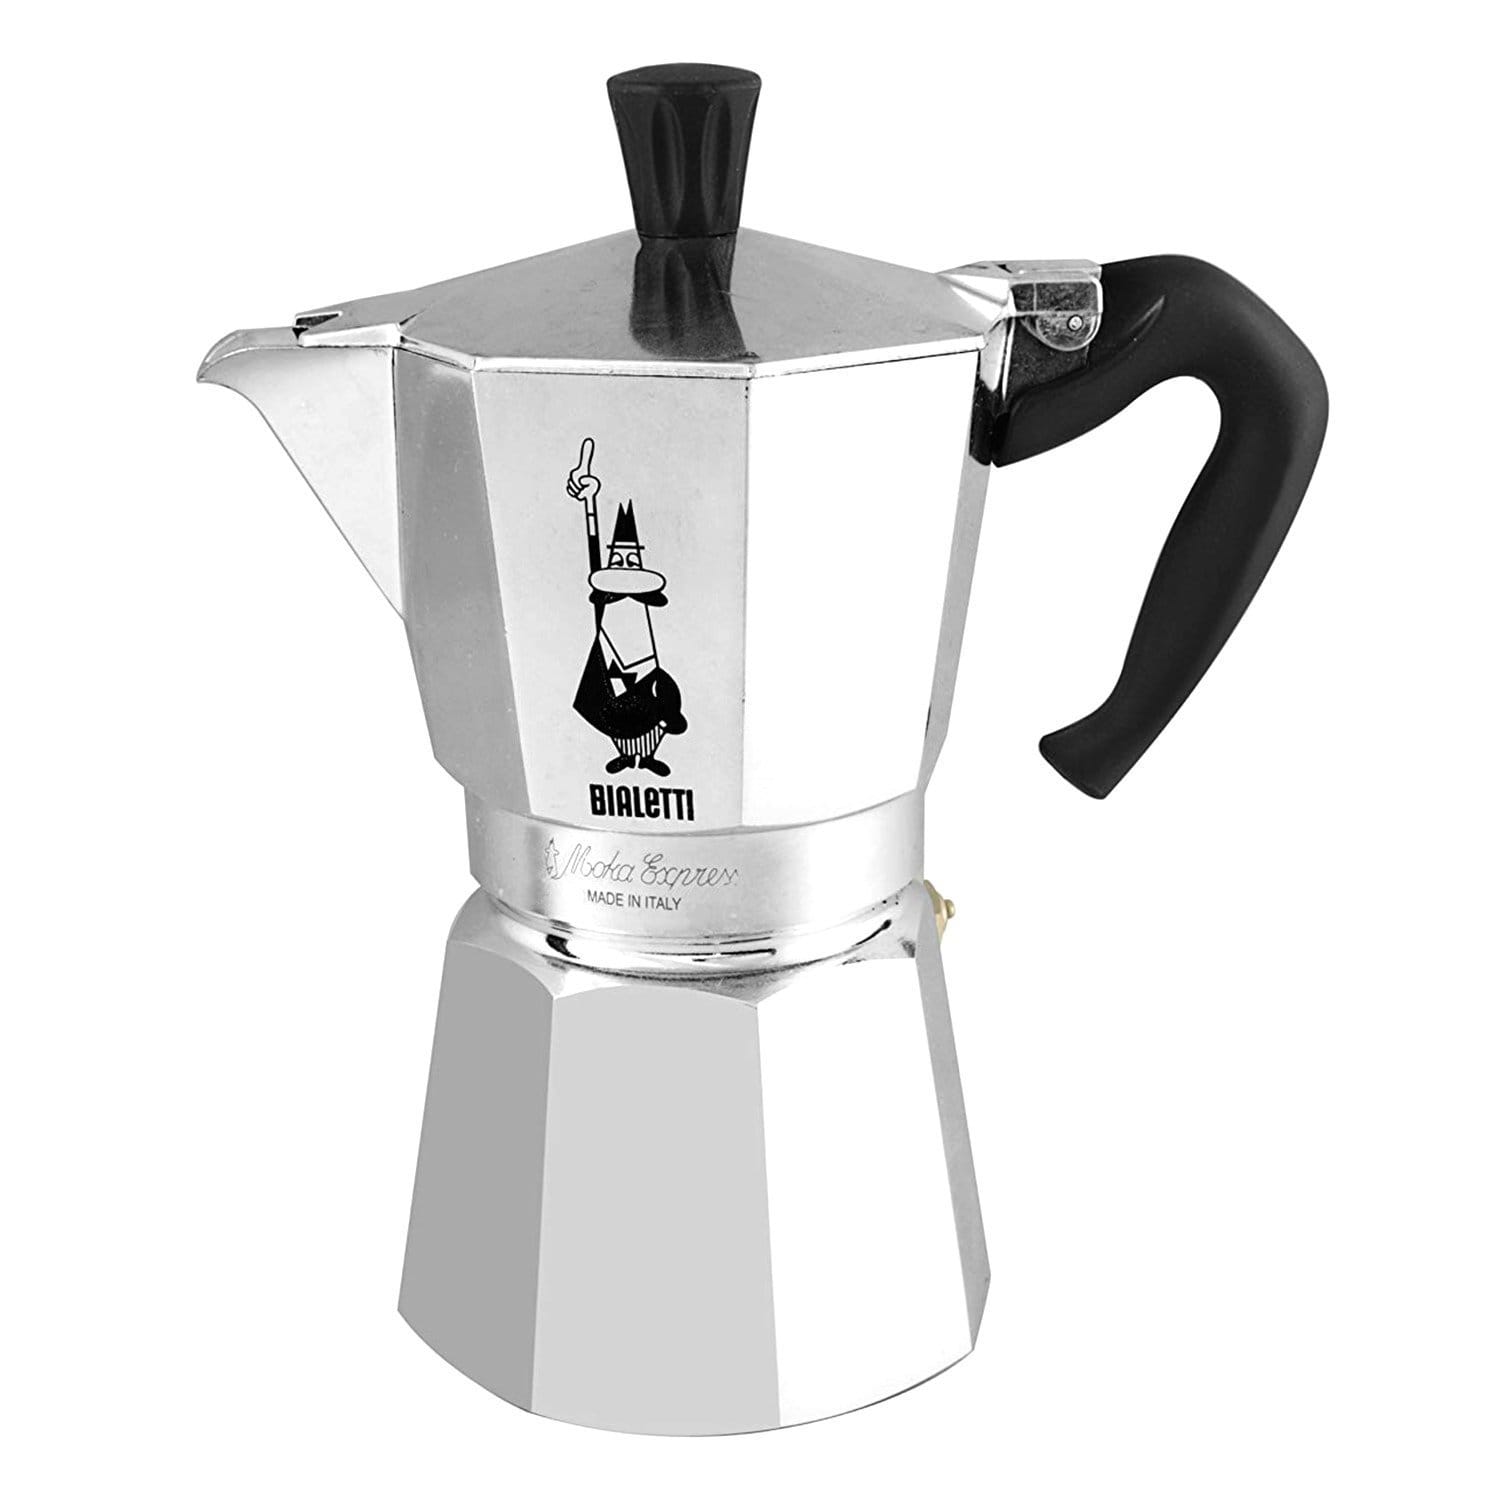 Bialetti Moka Express Coffee Maker - Silver, 4 Cups - 1164 - Jashanmal Home